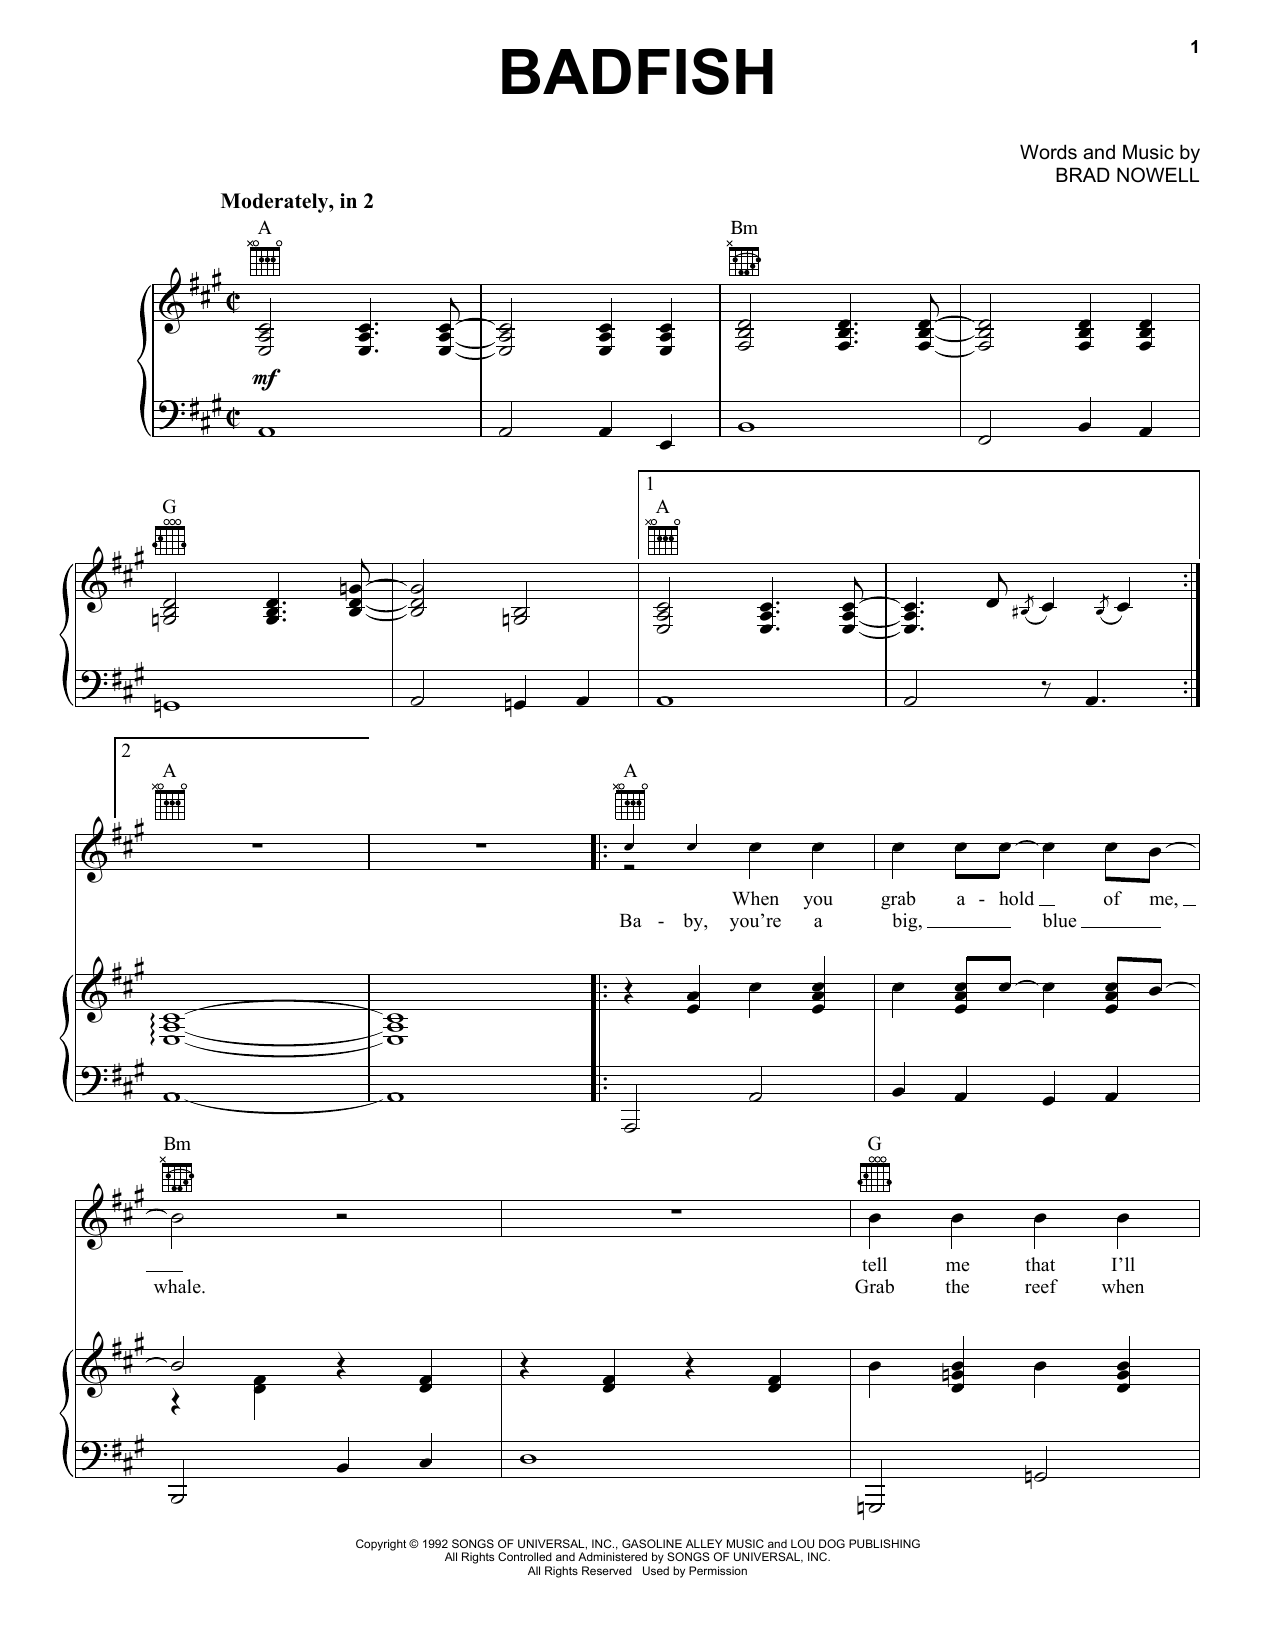 Sublime Badfish Sheet Music Notes & Chords for Guitar Tab (Single Guitar) - Download or Print PDF